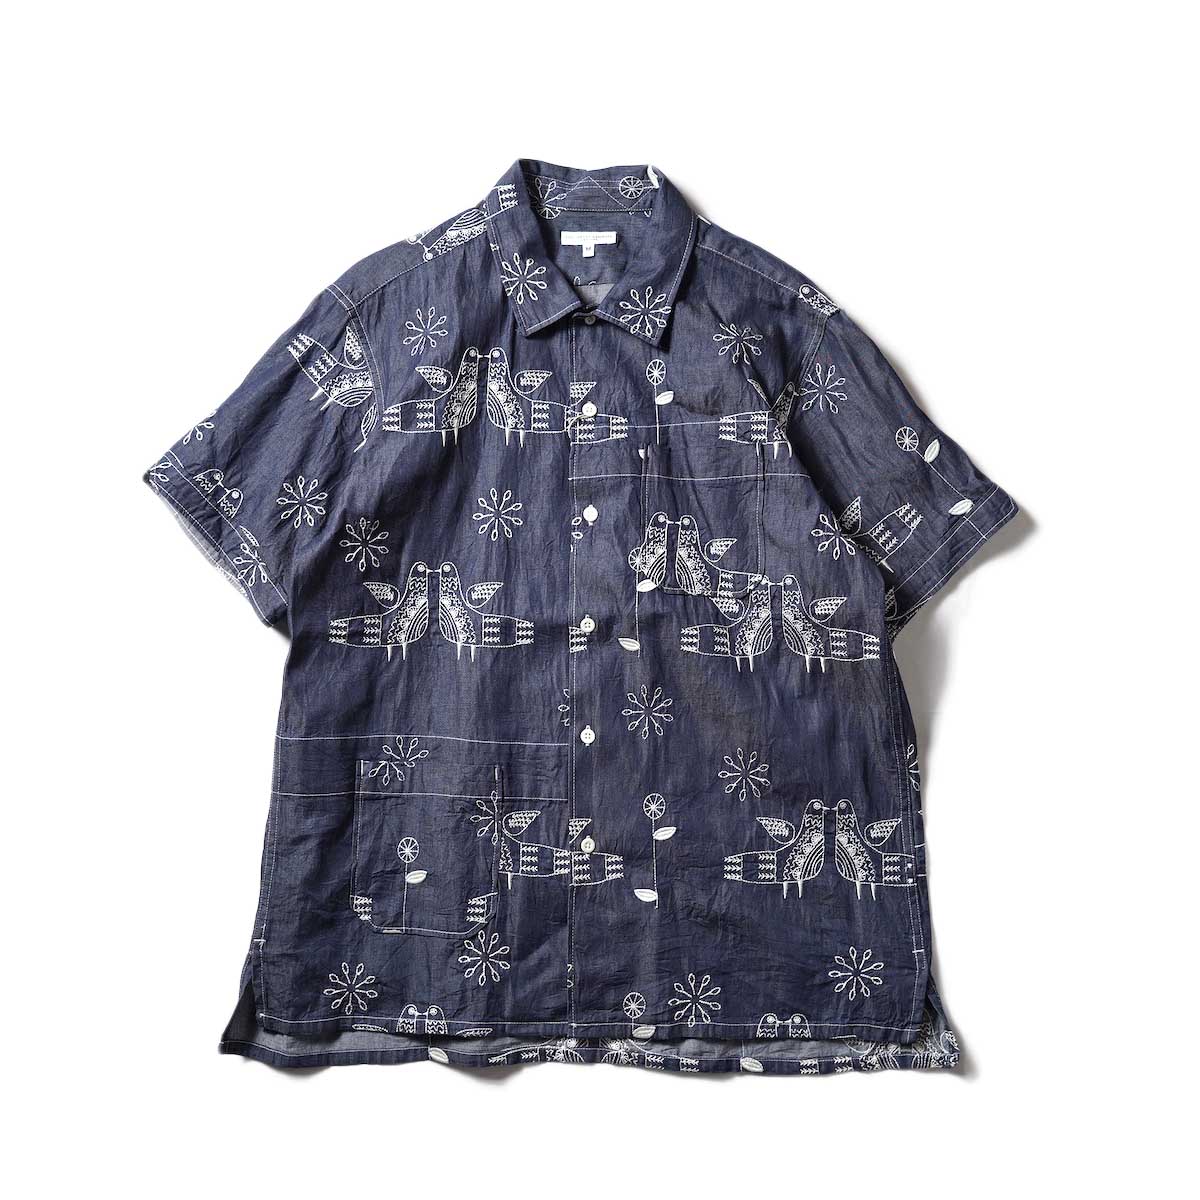 Engineered Garments / Camp Shirt - Bird Embroidery Denim (Indigo)